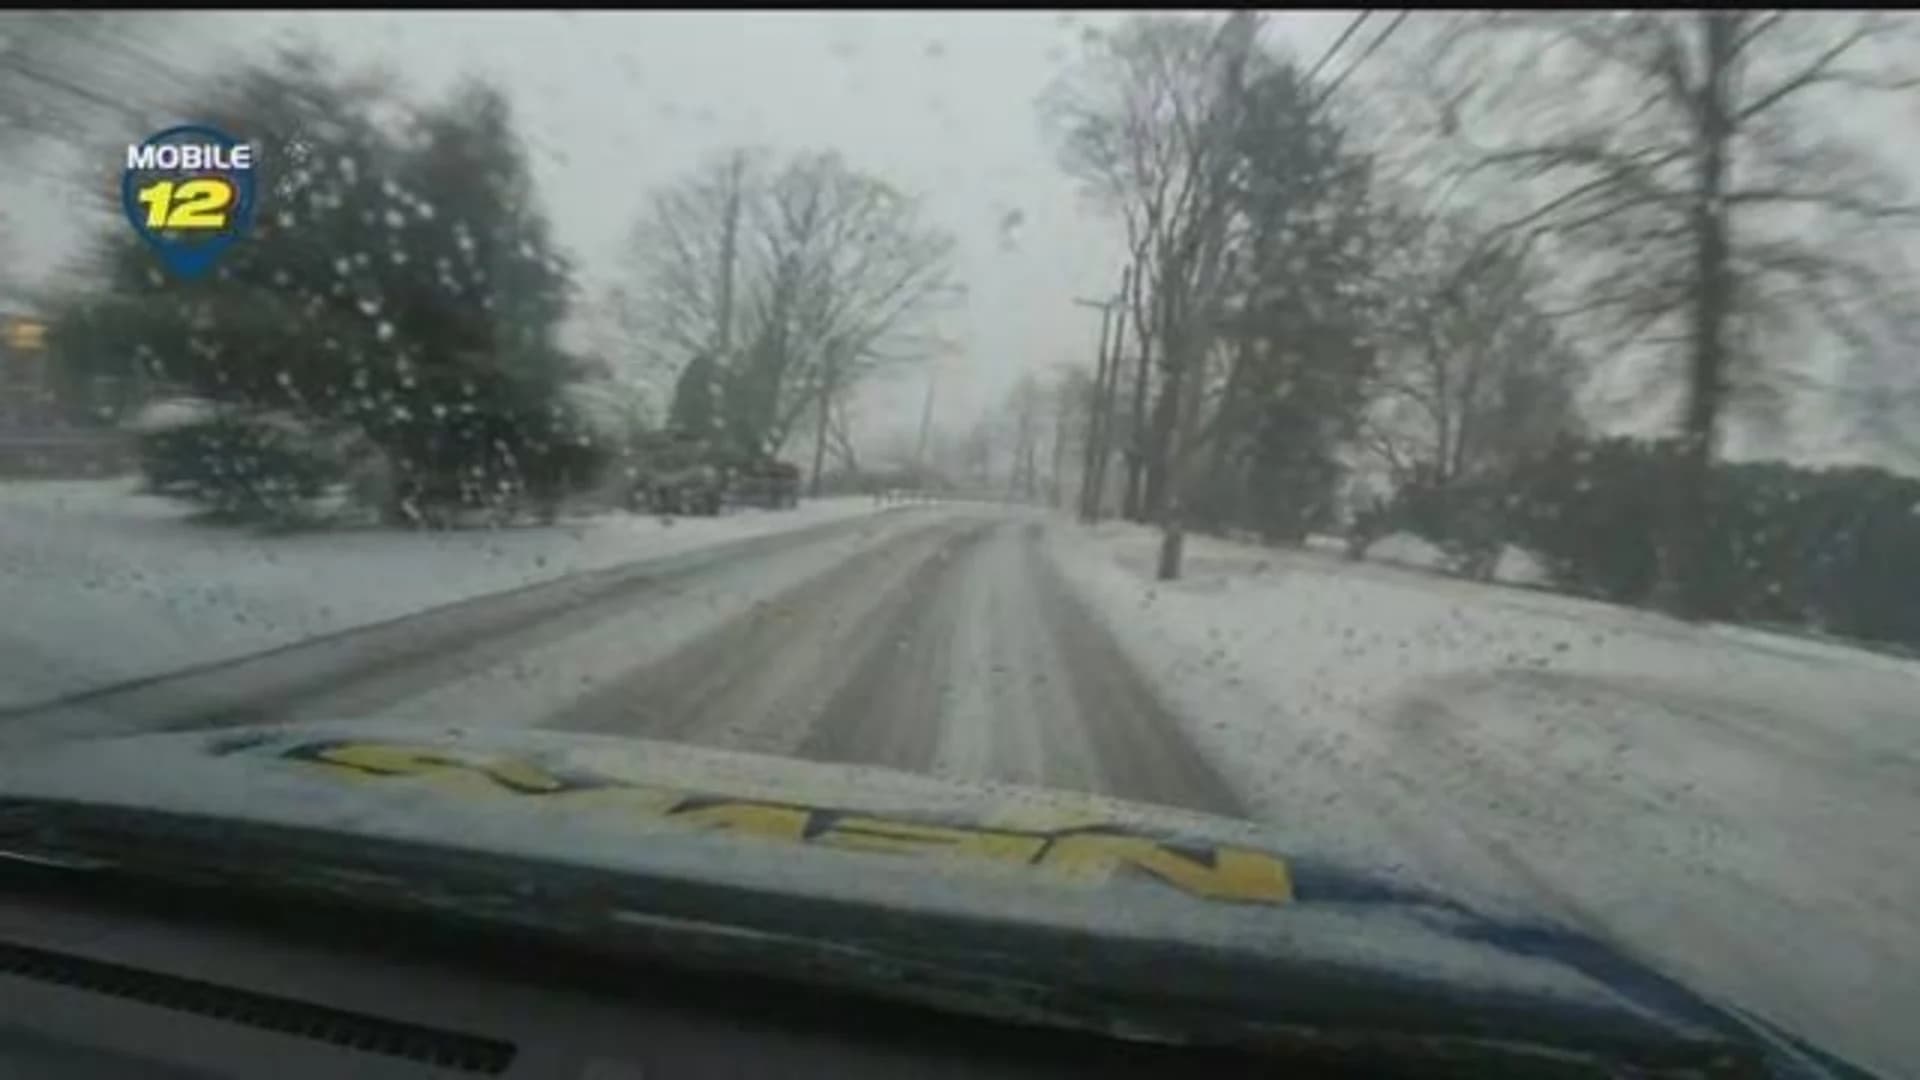 Mobile 12 checks snow conditions in Stratford